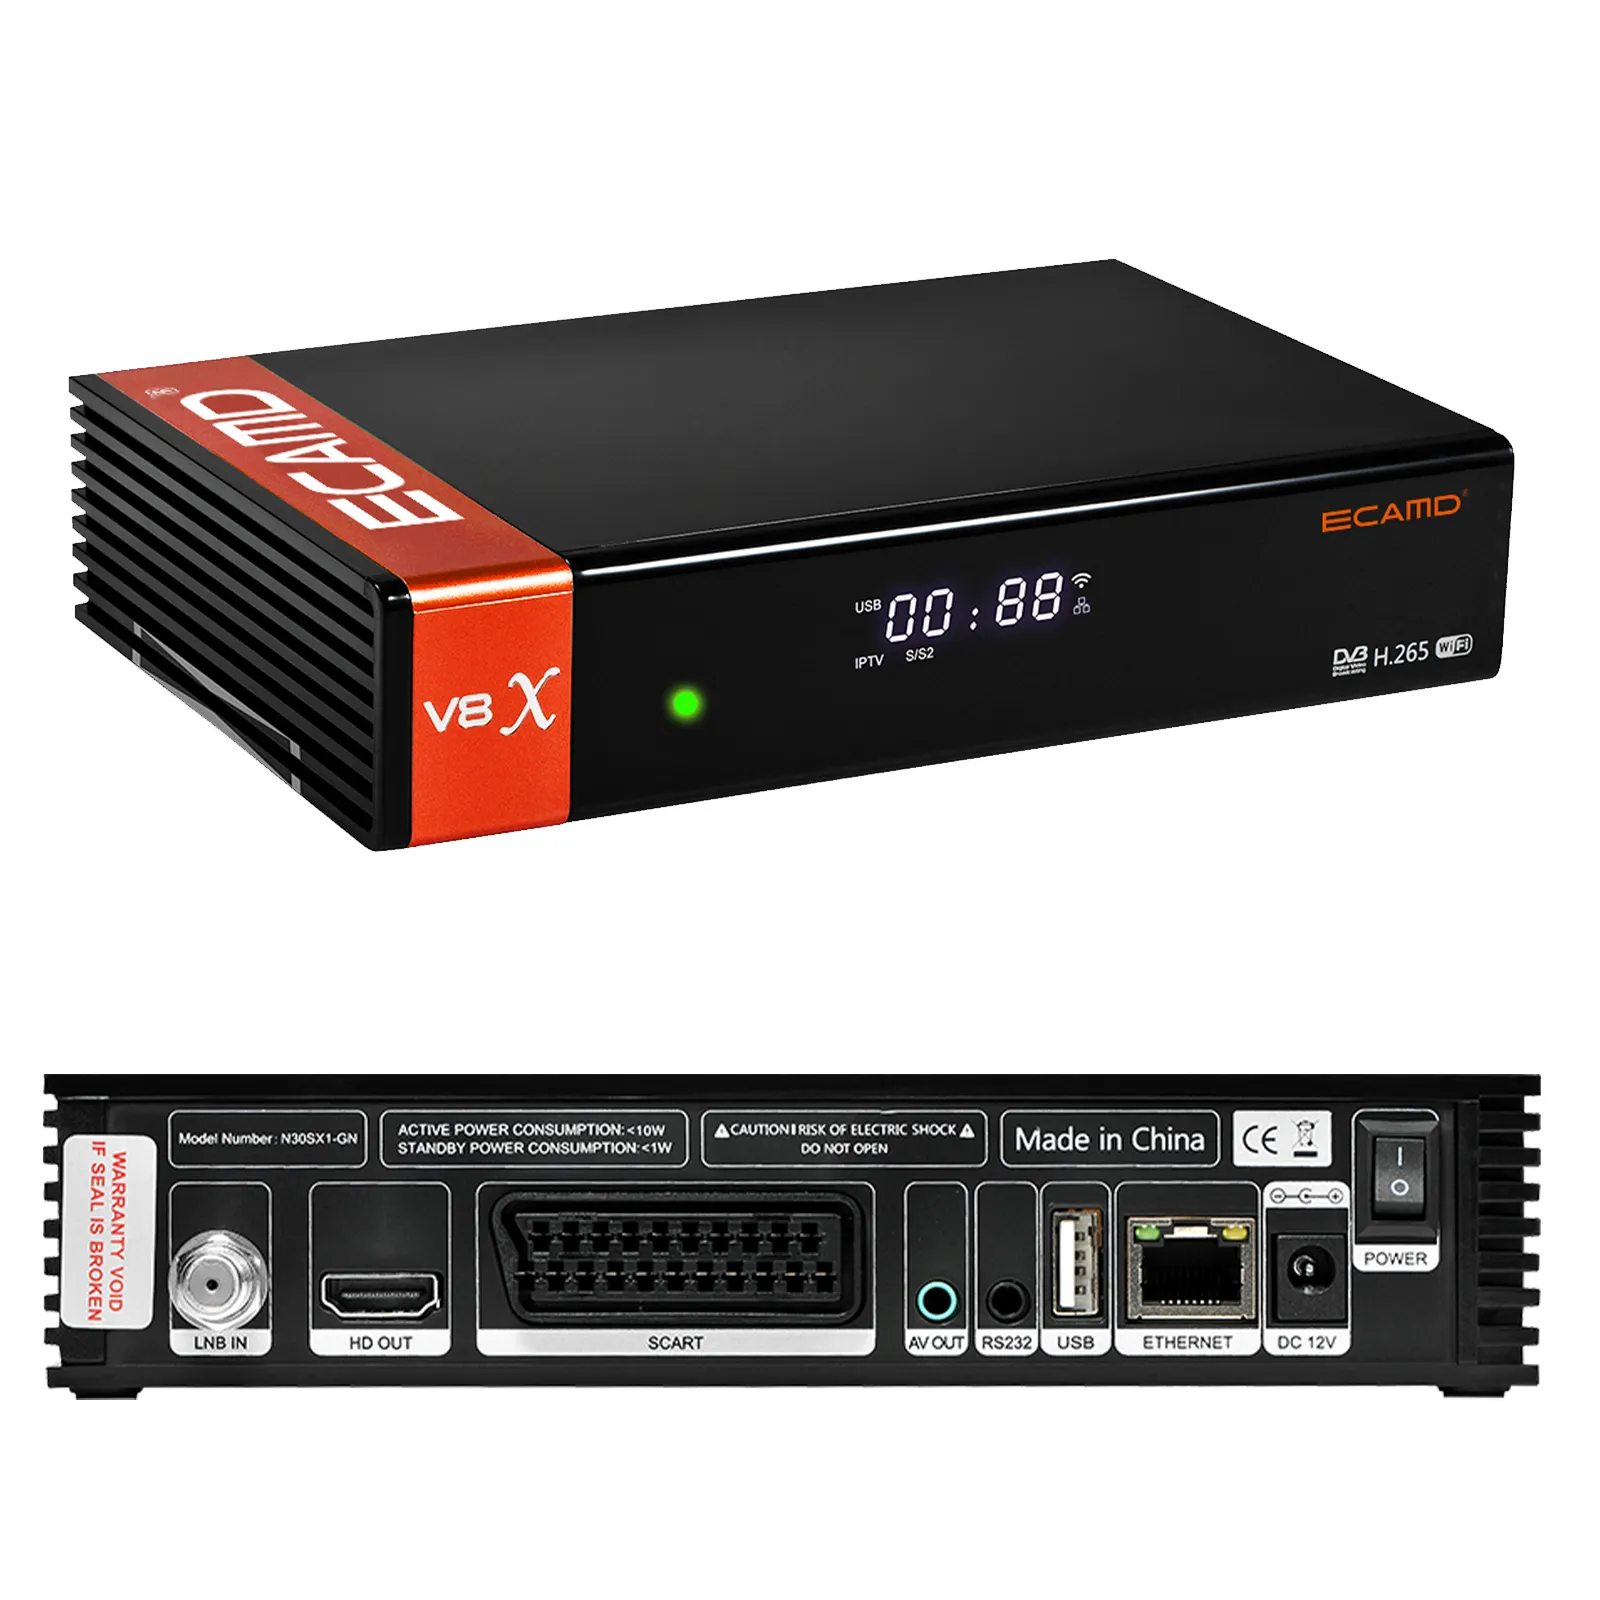 ECDARD V8X Set Top Box DVB-S/S2/S2X Livre para Ar Receptor Satélite de TV Sat Digital